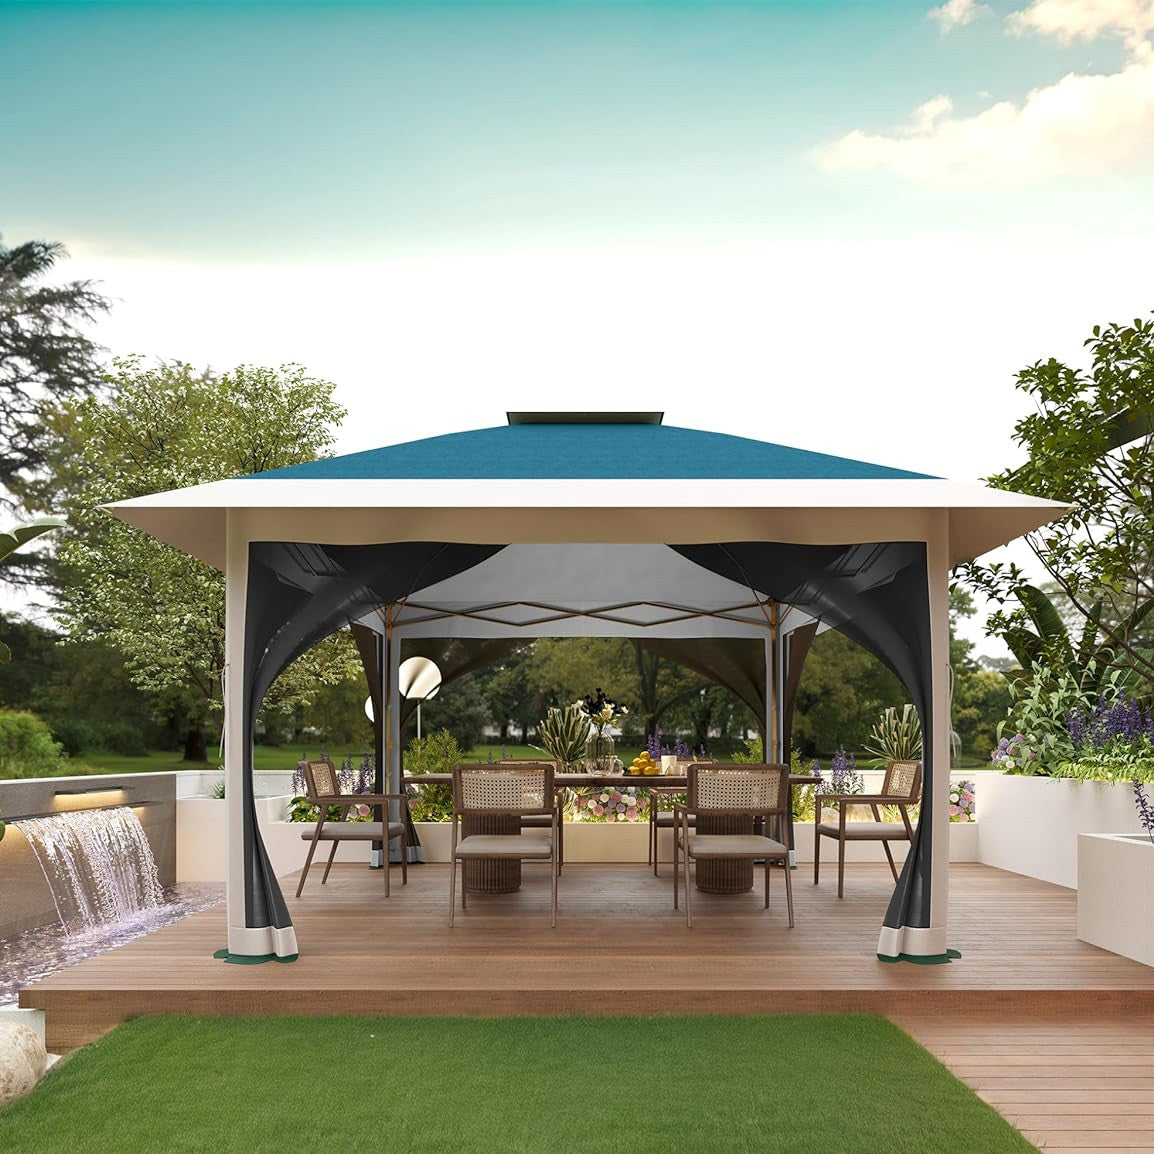 13' x 13' Outdoor Gazebo, Double Roof Patio Gazebo Quick Setup Instant Canopy Tent Instant Canopy Gazebo Shelter, Blue & Gray